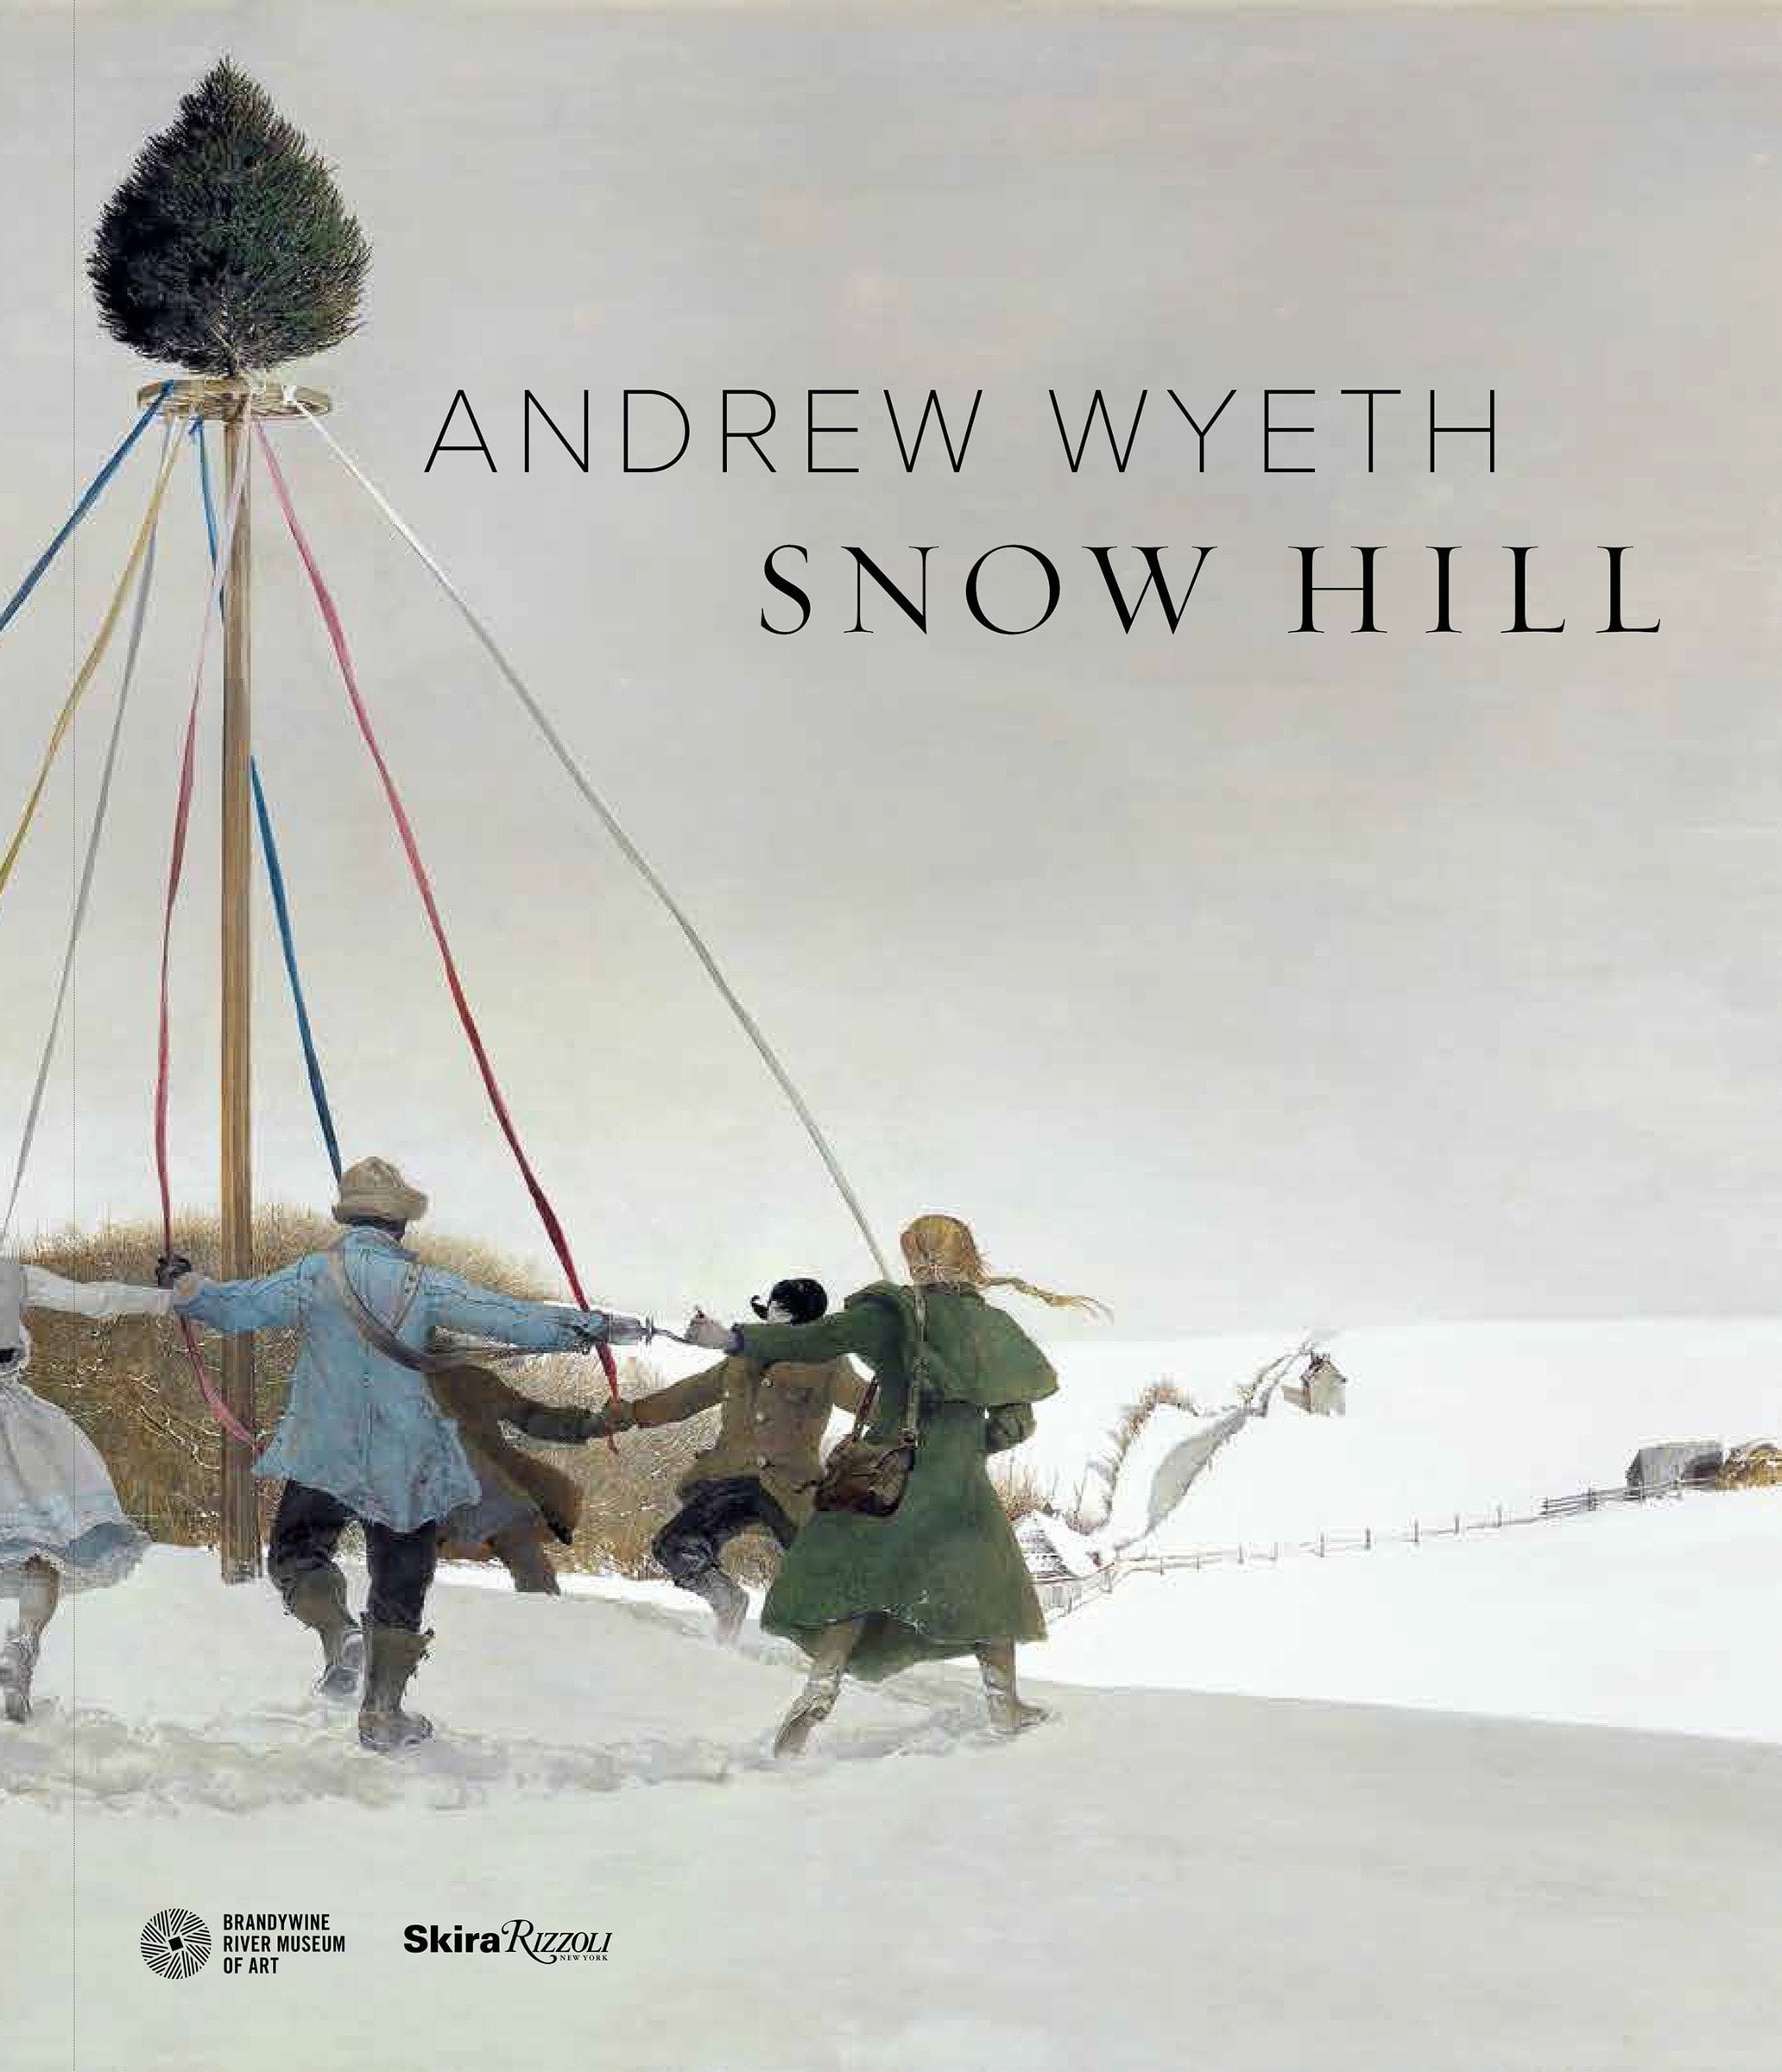 Andrew Wyeths Snow Hill